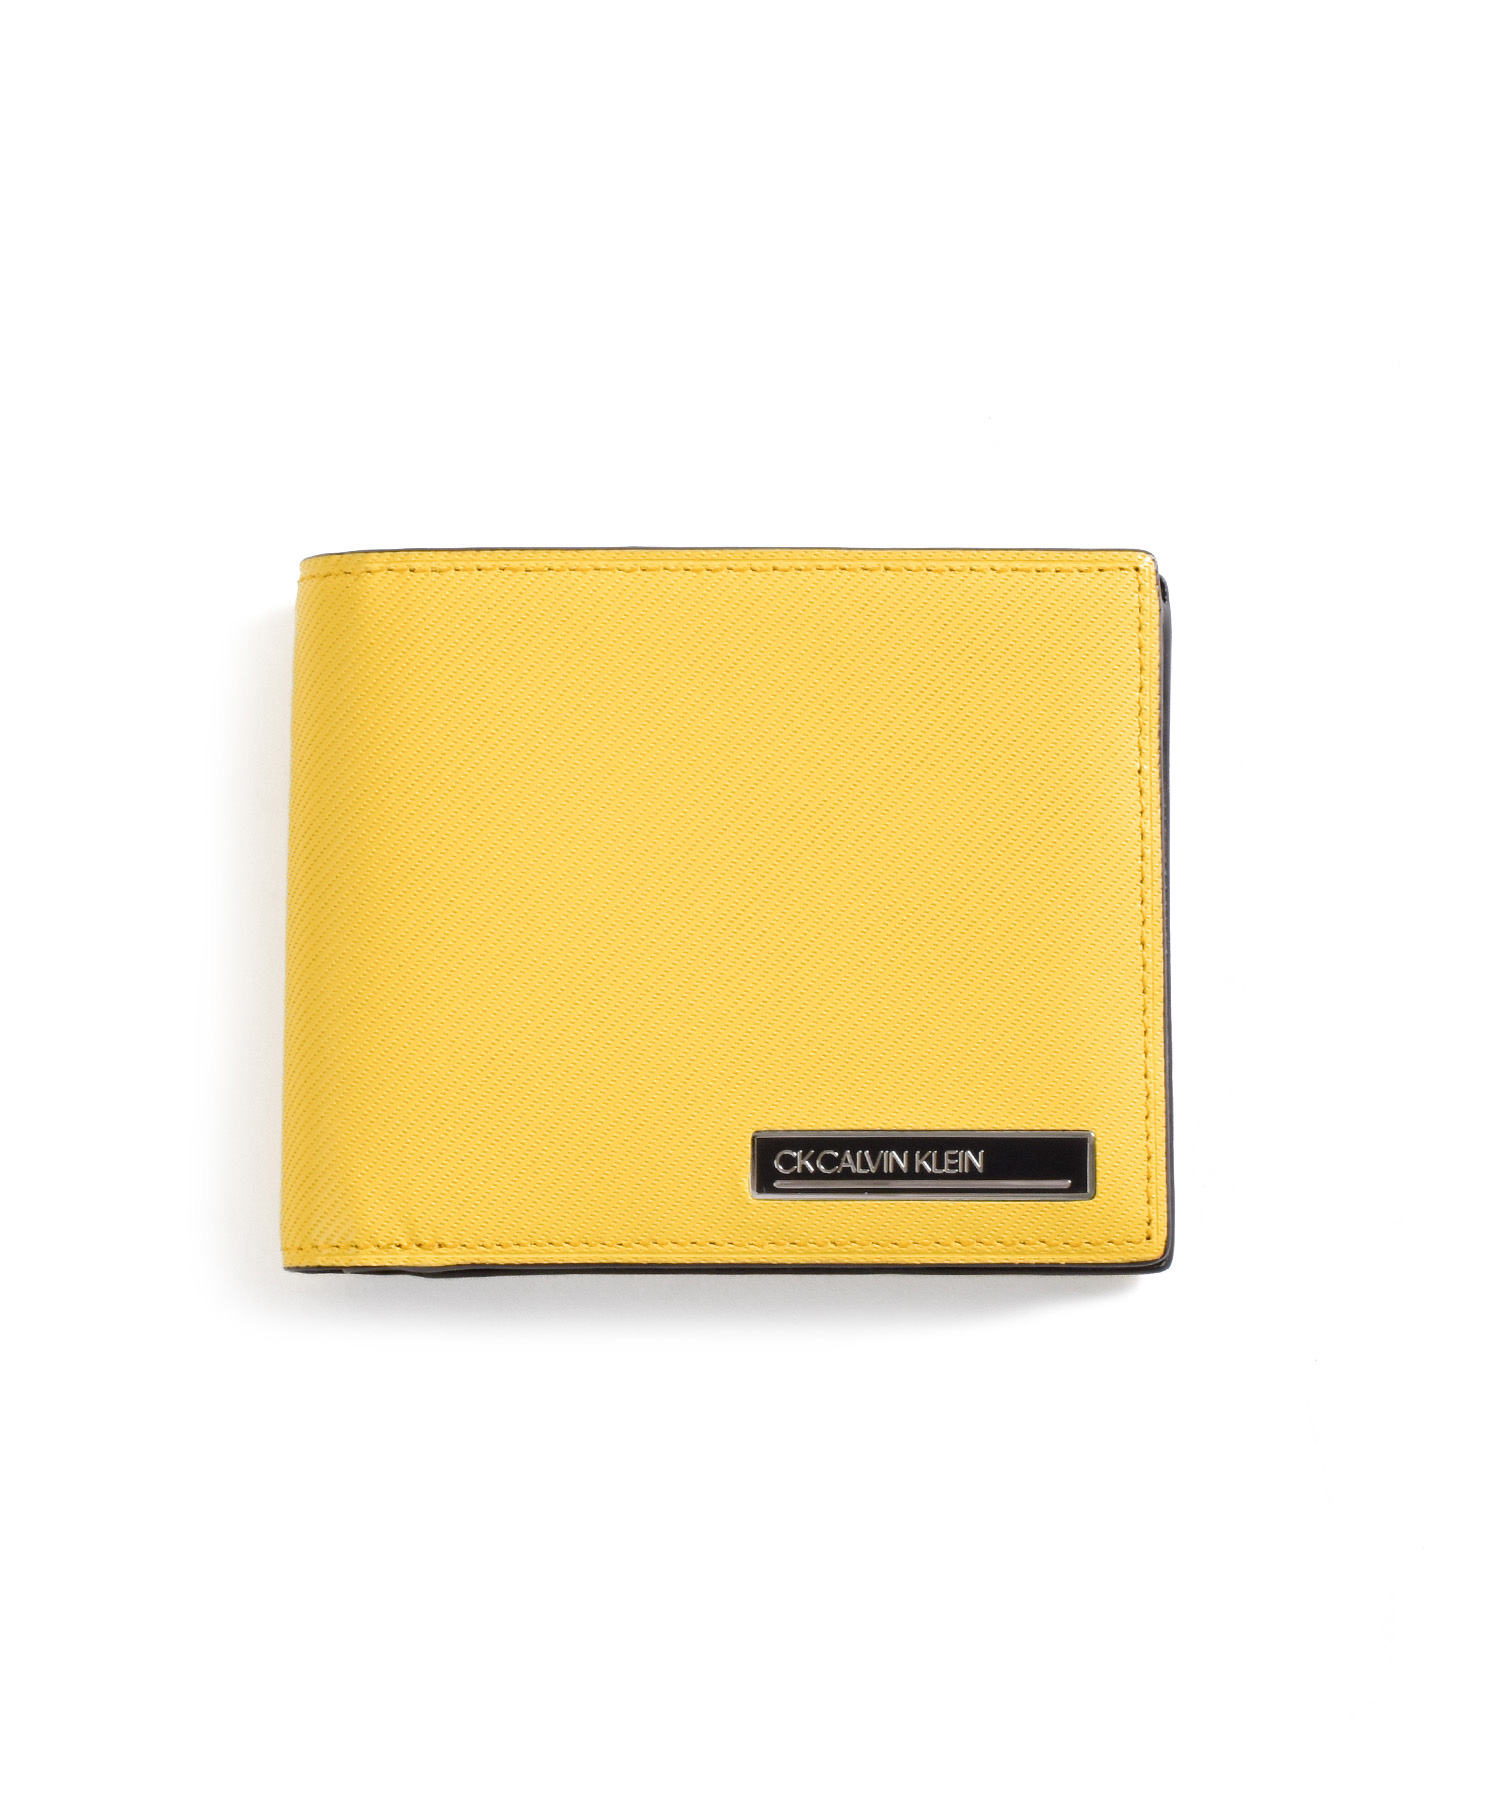 ck Calvin Klein(ck カルバン・クライン)CKカルバン・クライン ポリッシュ 二つ折り財布 カード段6 No.817635を